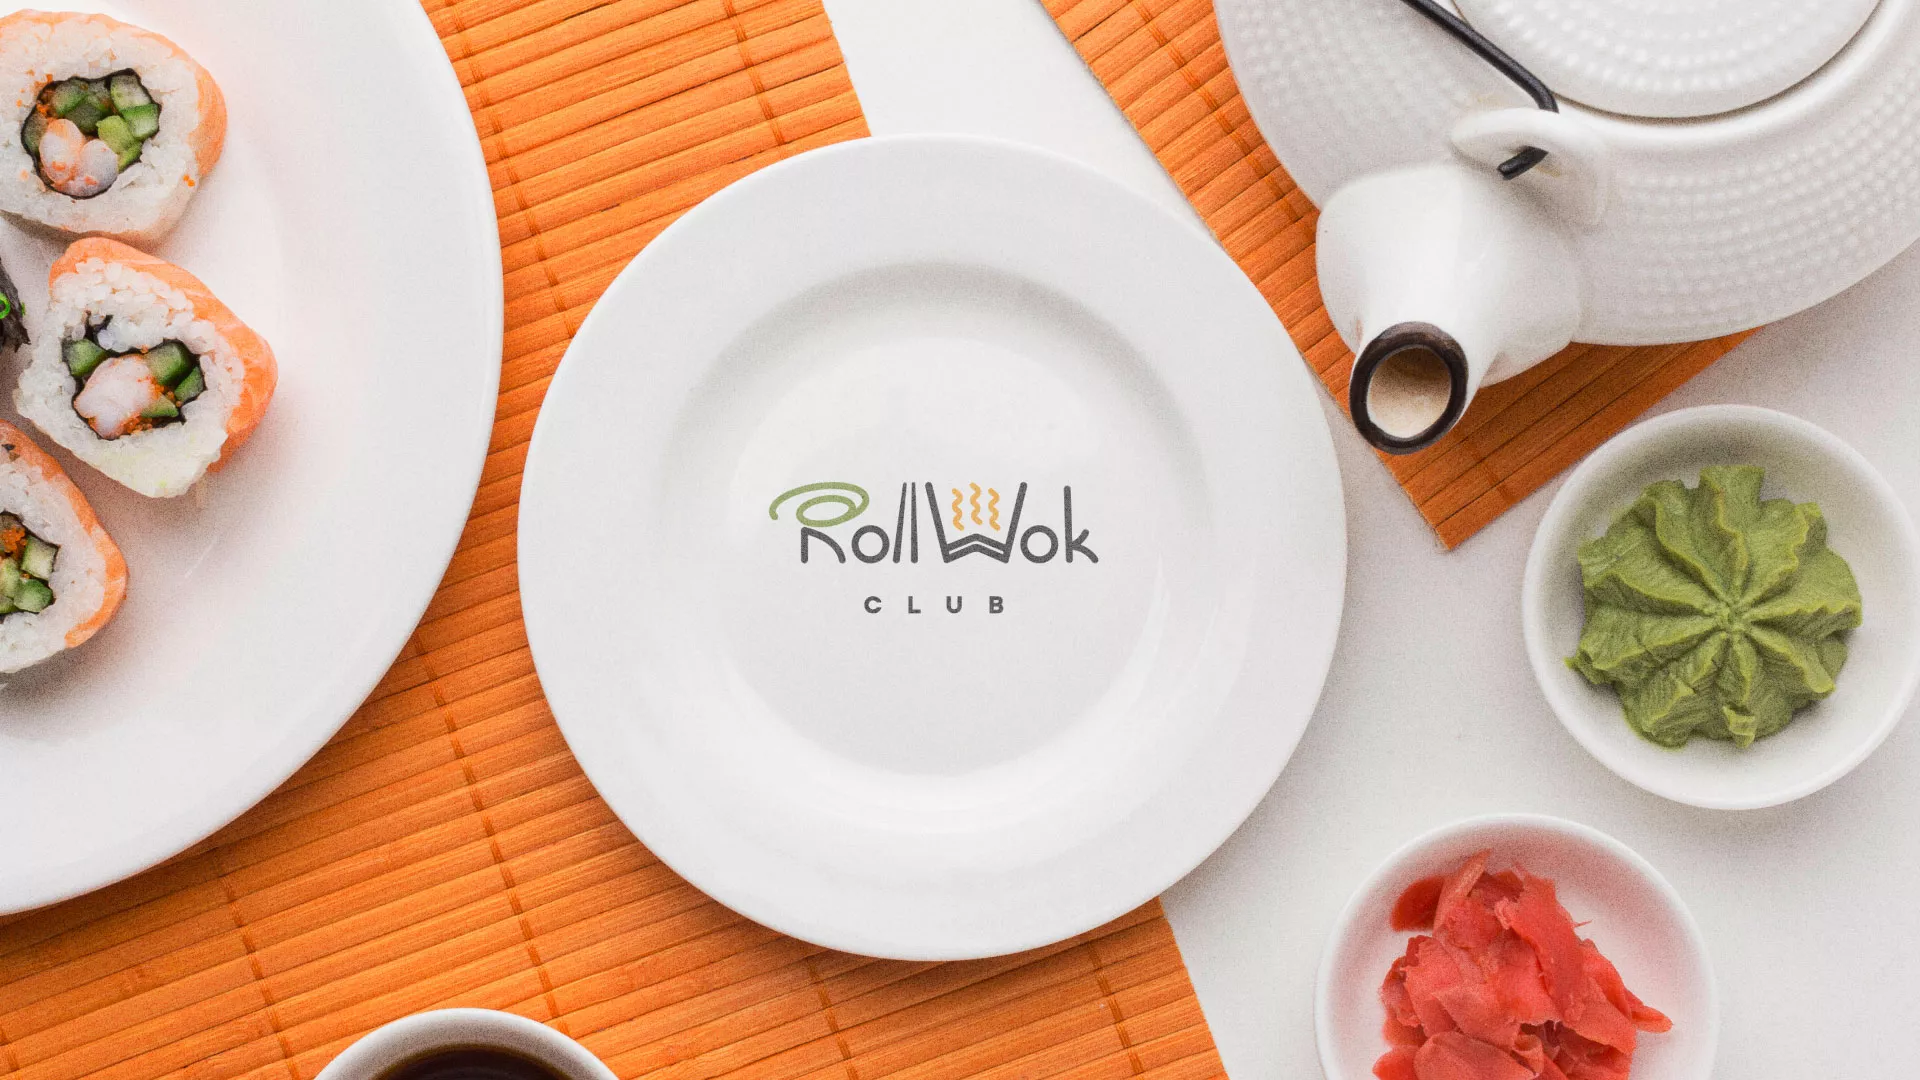 Разработка логотипа и фирменного стиля суши-бара «Roll Wok Club» в Юбилейном